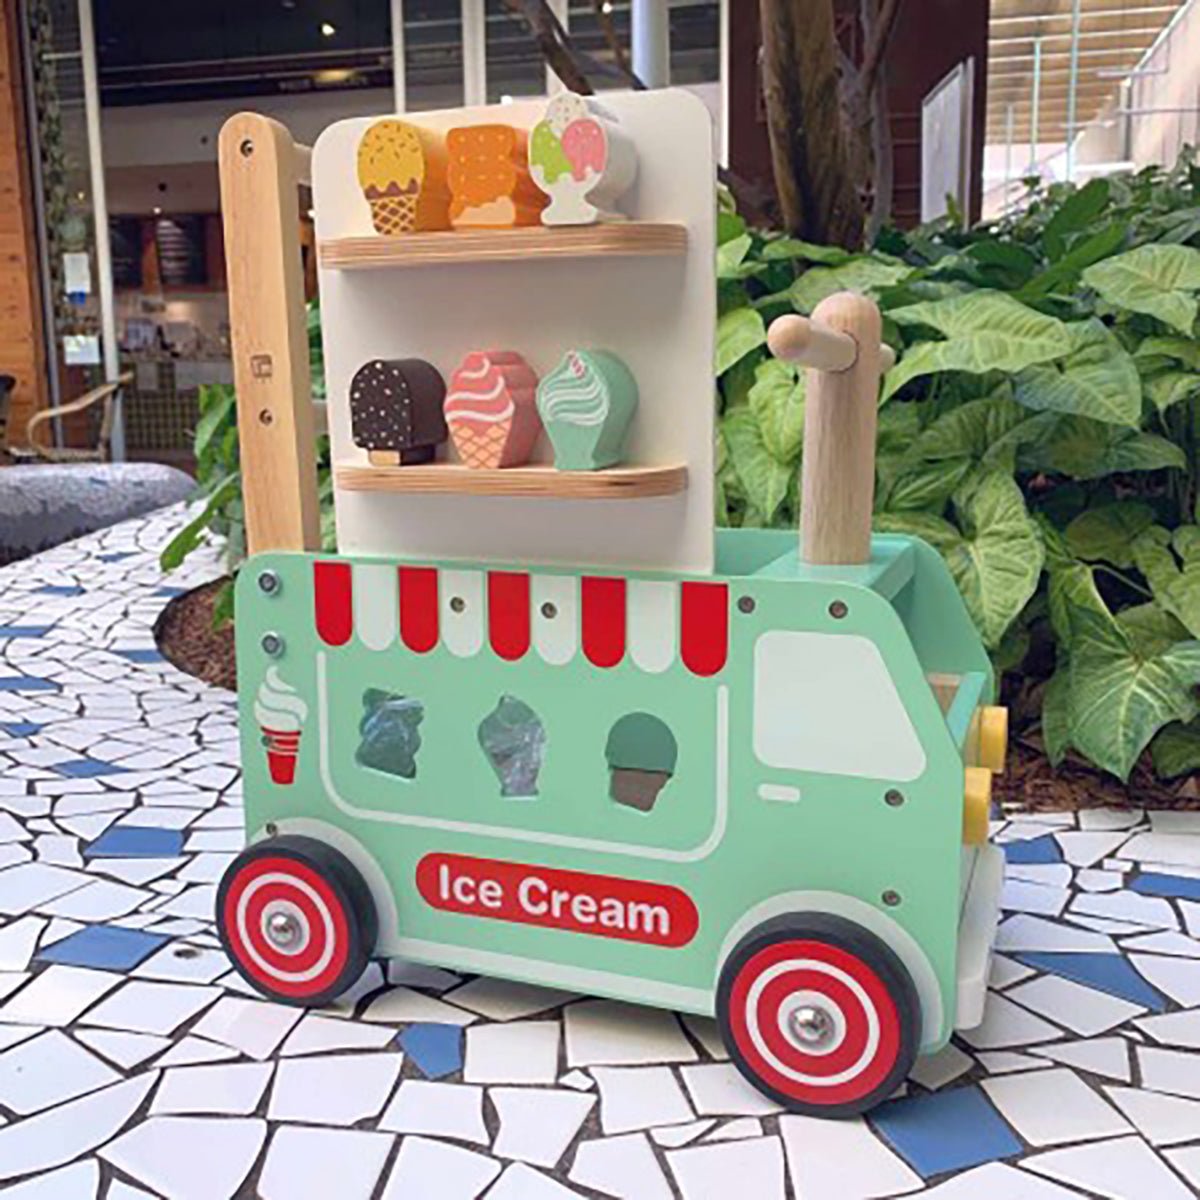 Walk and Ride Ice Cream Truck | Im toy